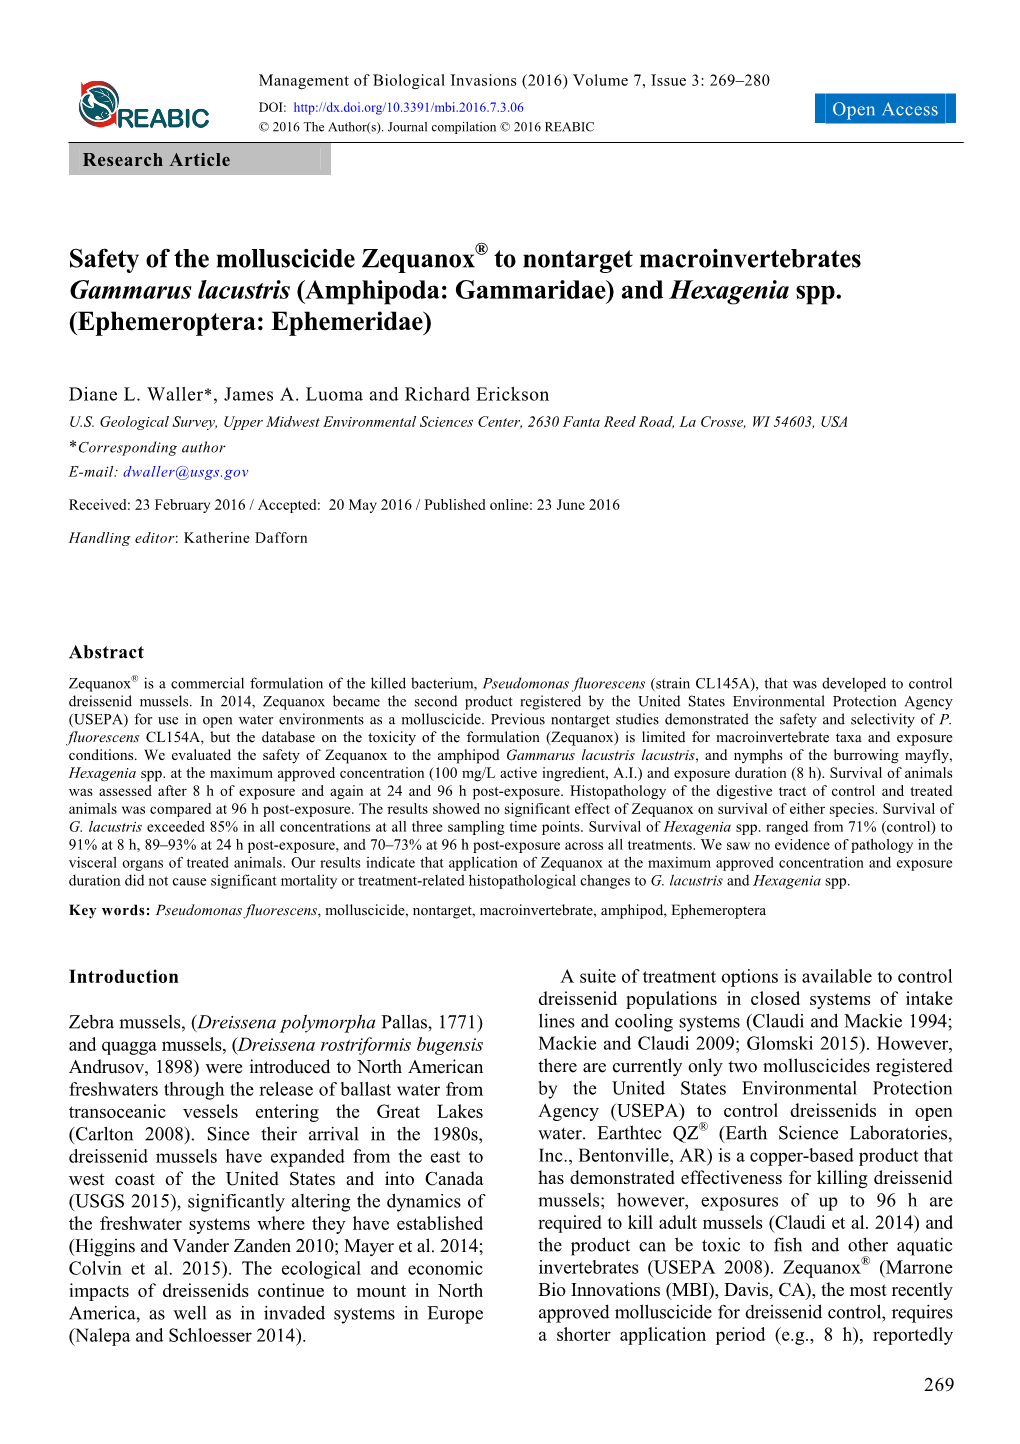 Safety of the Molluscicide Zequanox® to Nontarget Macroinvertebrates Gammarus Lacustris (Amphipoda: Gammaridae) and Hexagenia Spp